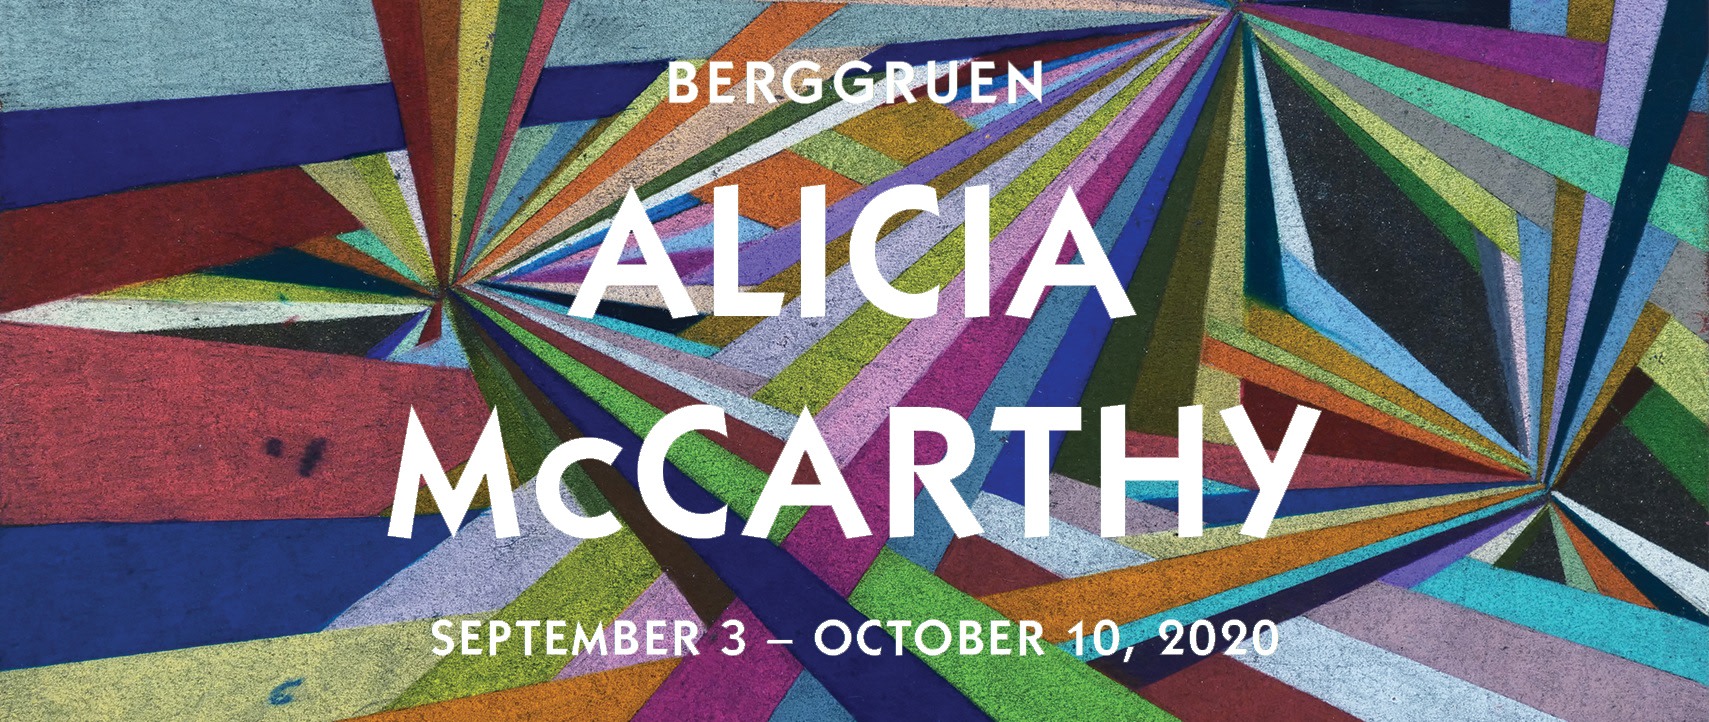 Alicia McCarthy - September 3 - October 10, 2020 - Viewing Room - Berggruen Gallery Viewing Room